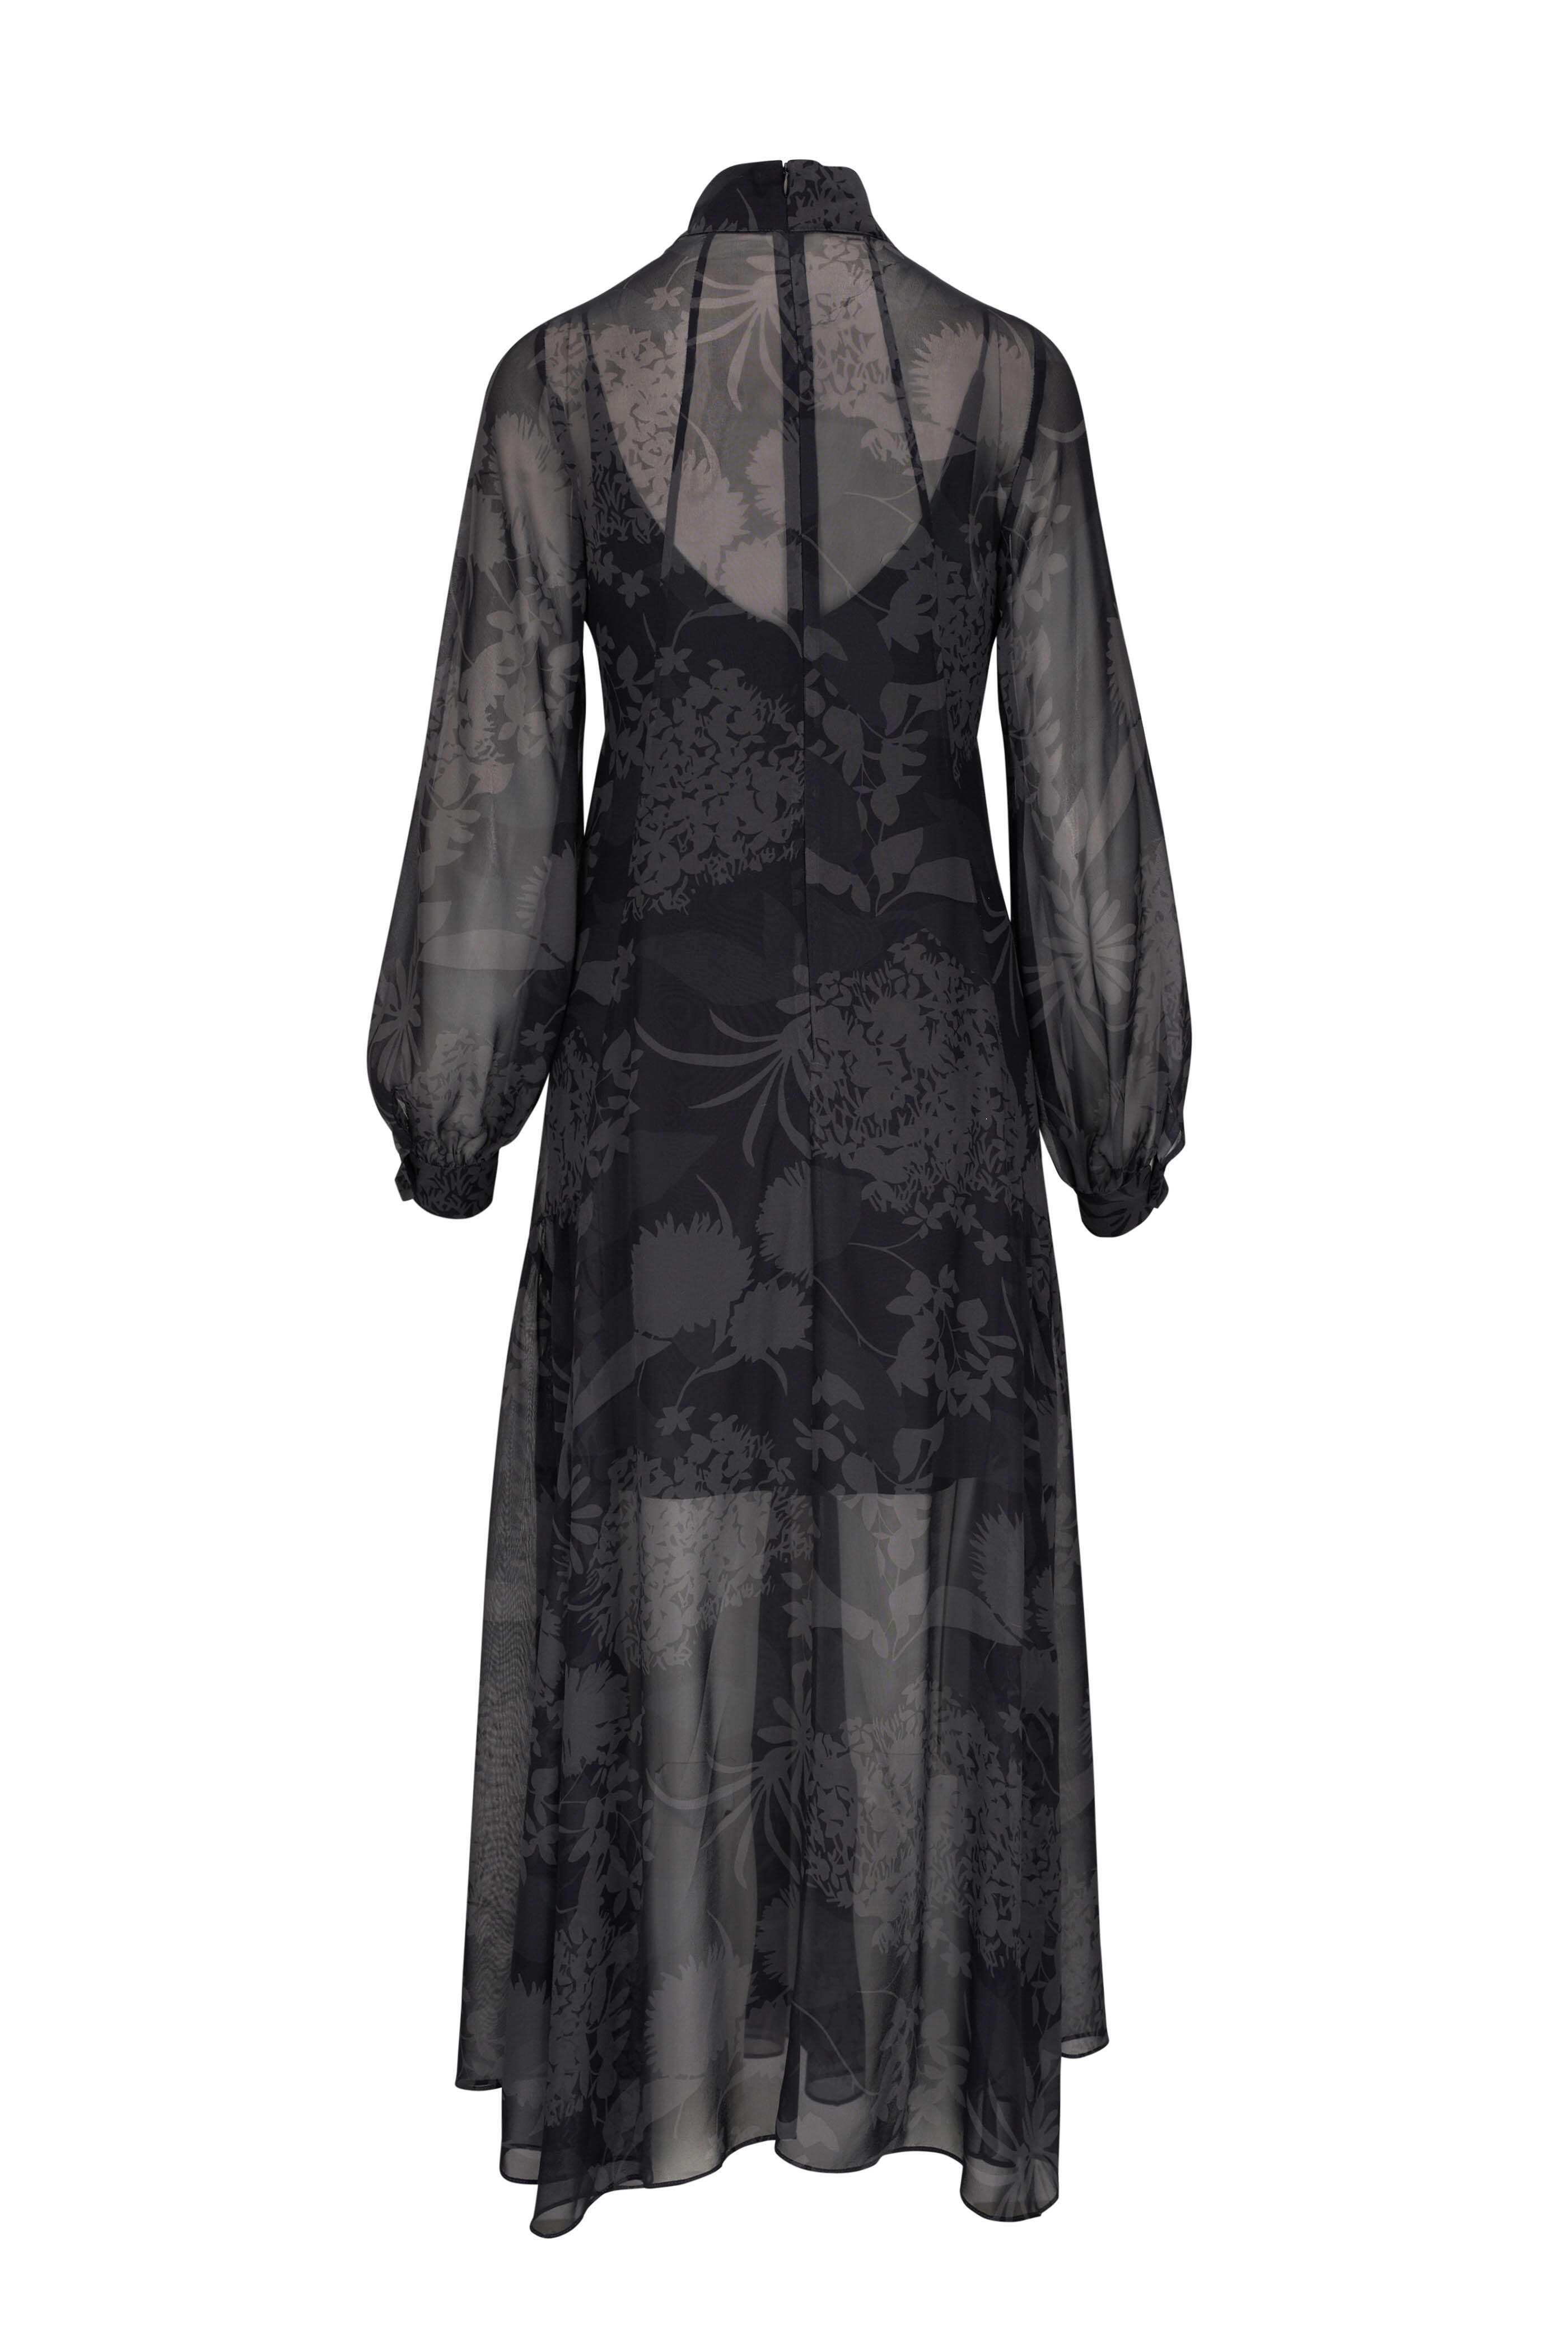 Akris - Black & Gray Sheer Silk Printed Floral Gown